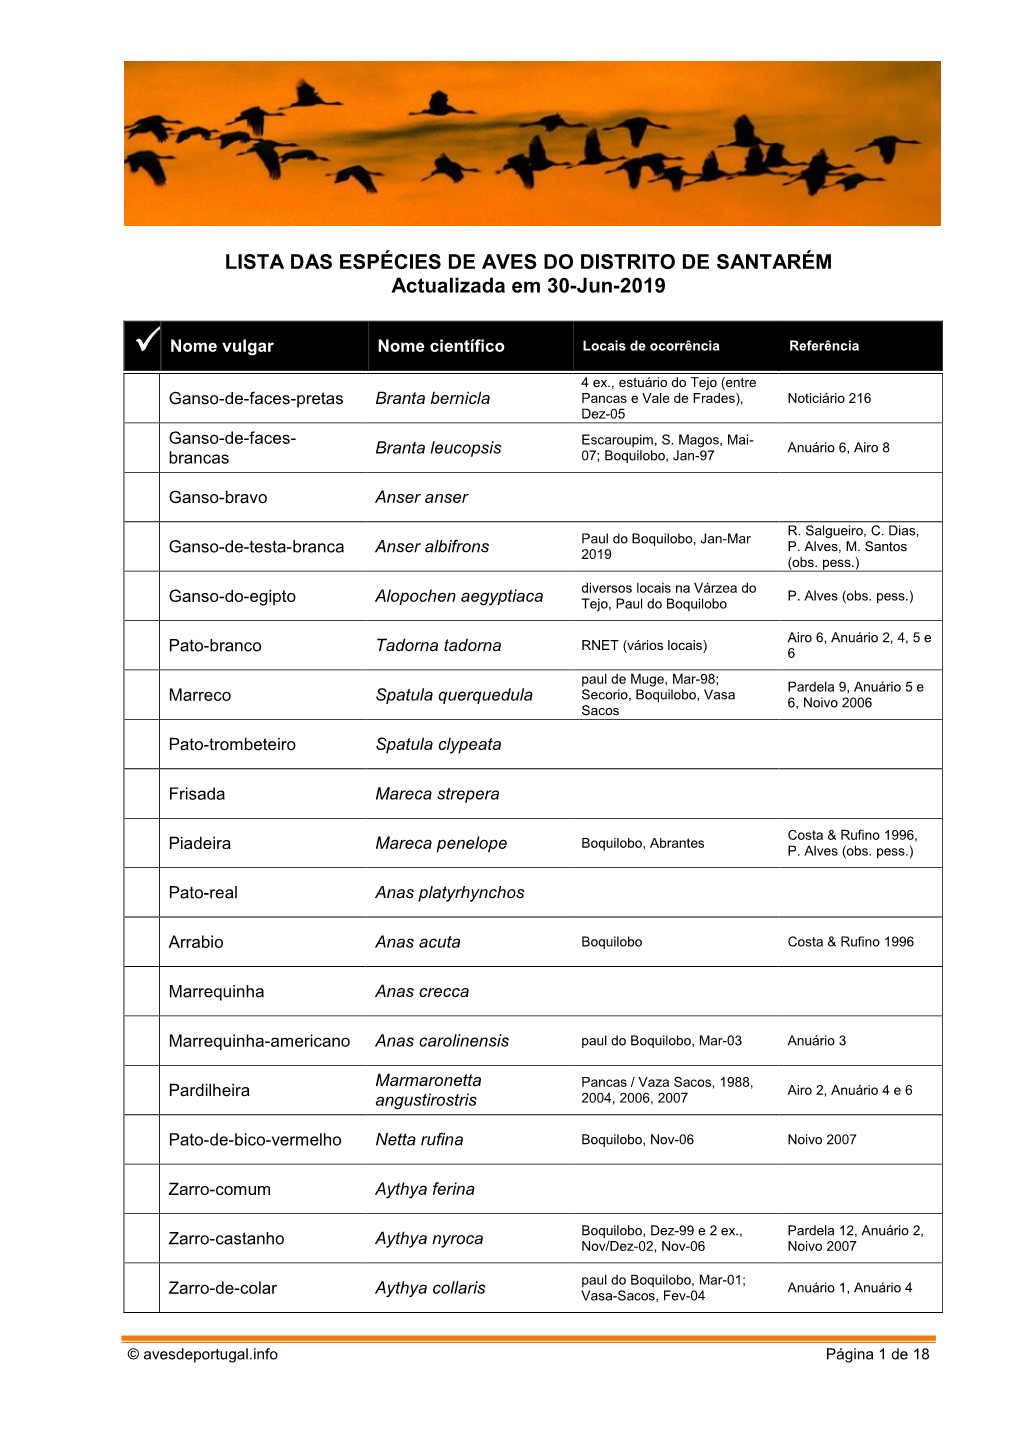 LISTA DAS ESPÉCIES DE AVES DO DISTRITO DE SANTARÉM Actualizada Em 30-Jun-2019